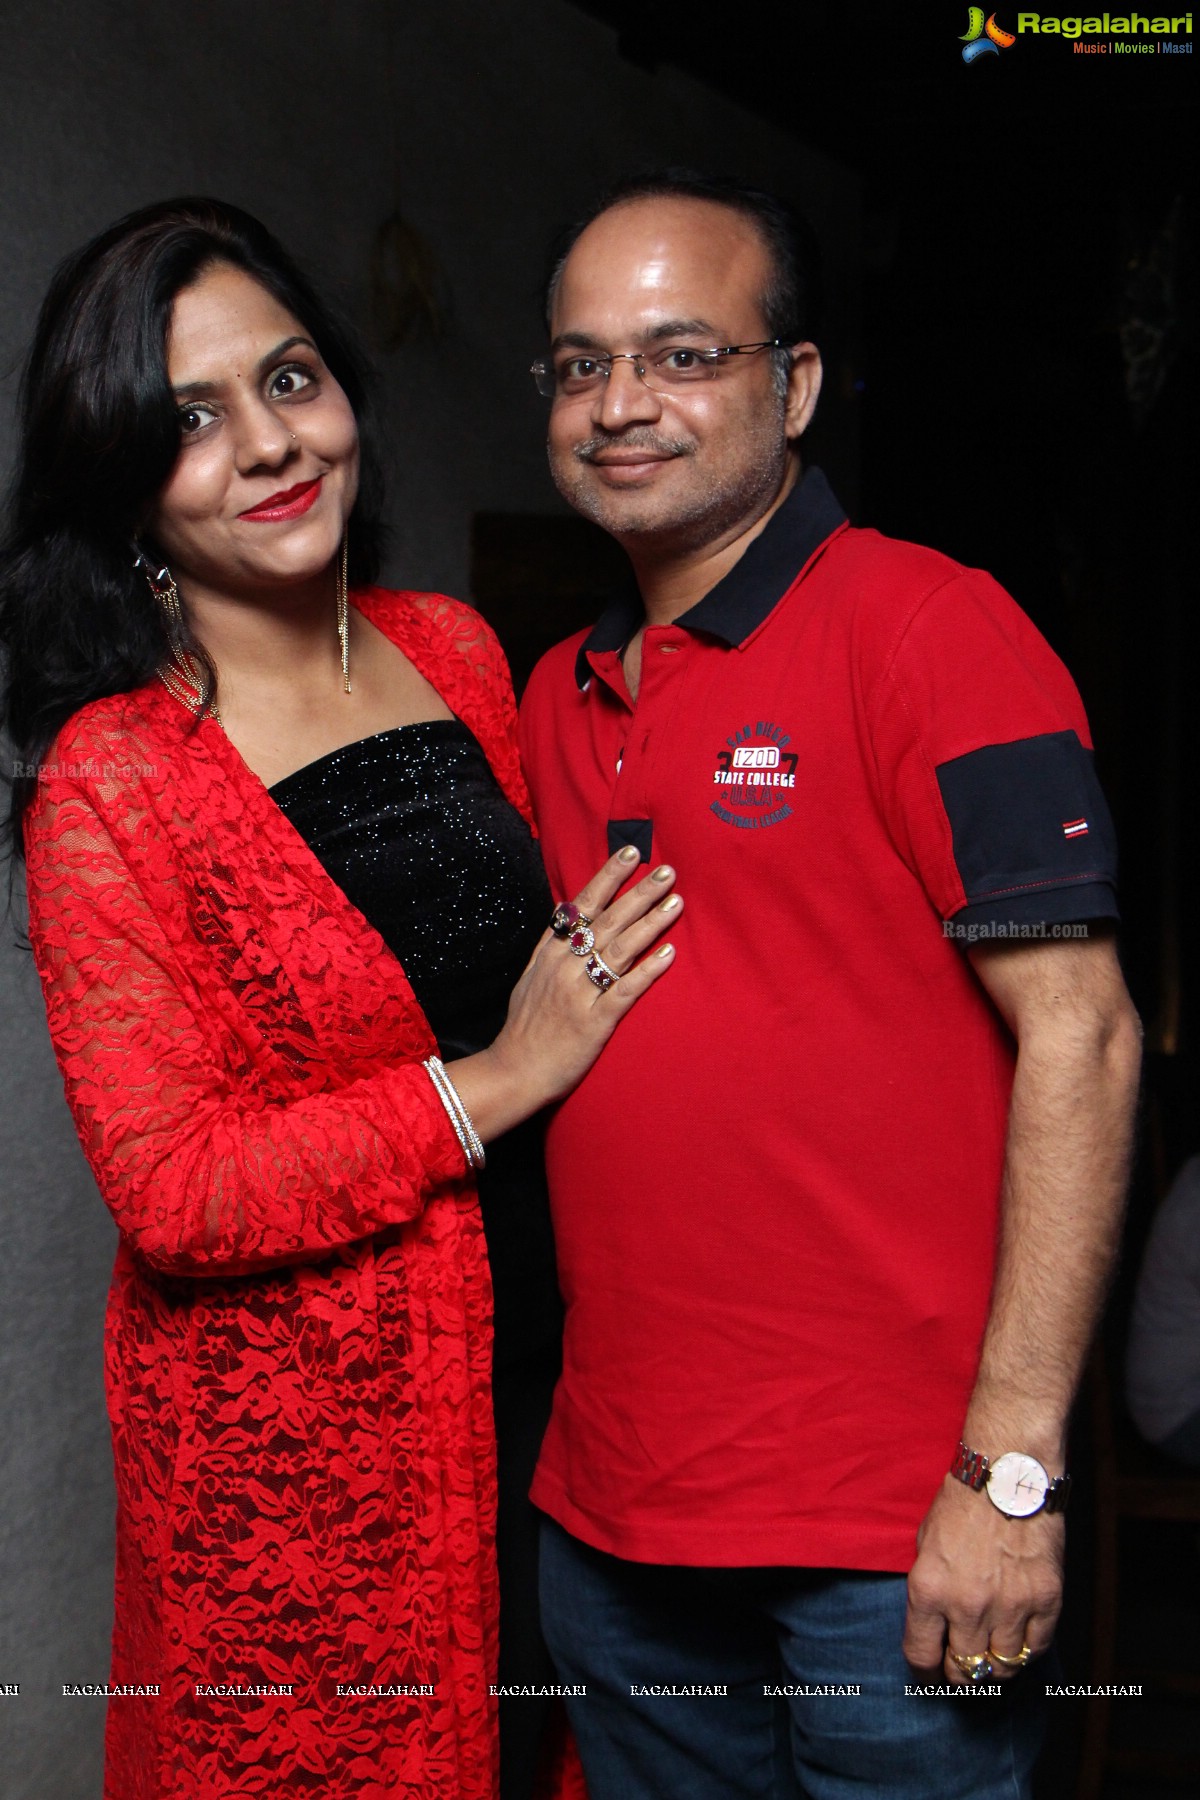 Sushila Bokadiya Birthday Bash at Playboy Beer Garden, Jubilee Hills, Hyderabad